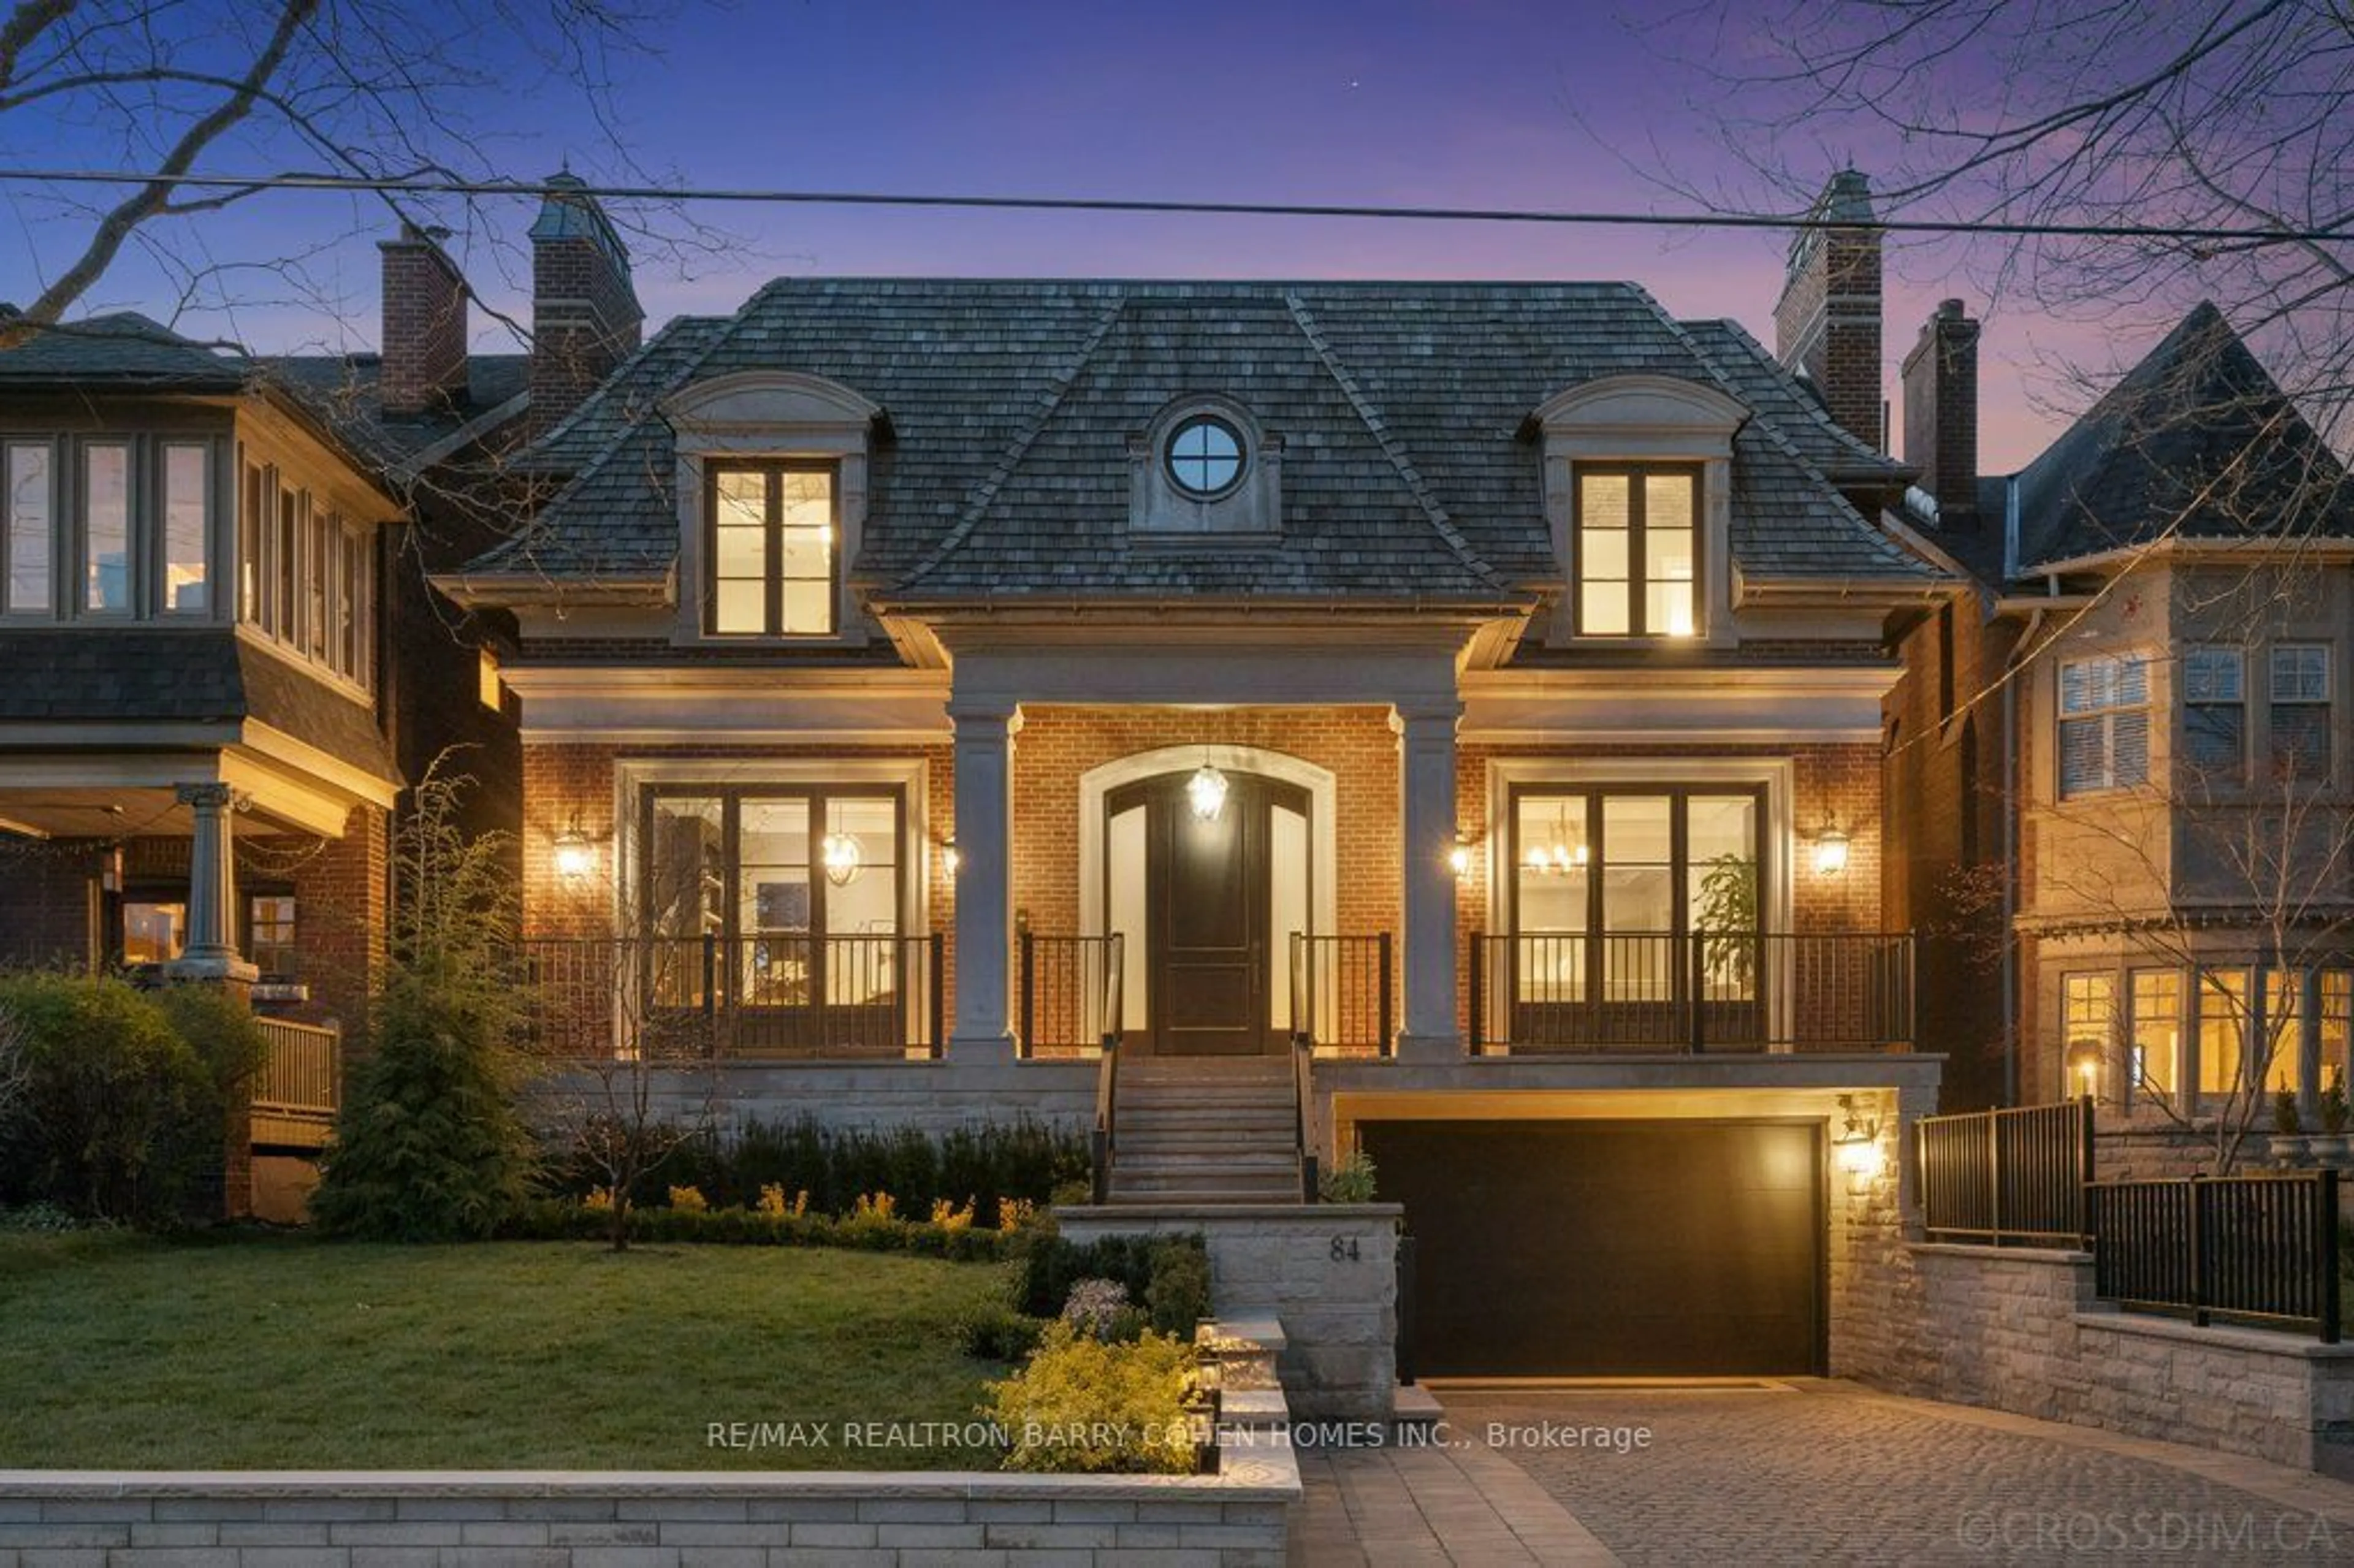 Home with brick exterior material for 84 Glencairn Ave, Toronto Ontario M4R 1M8